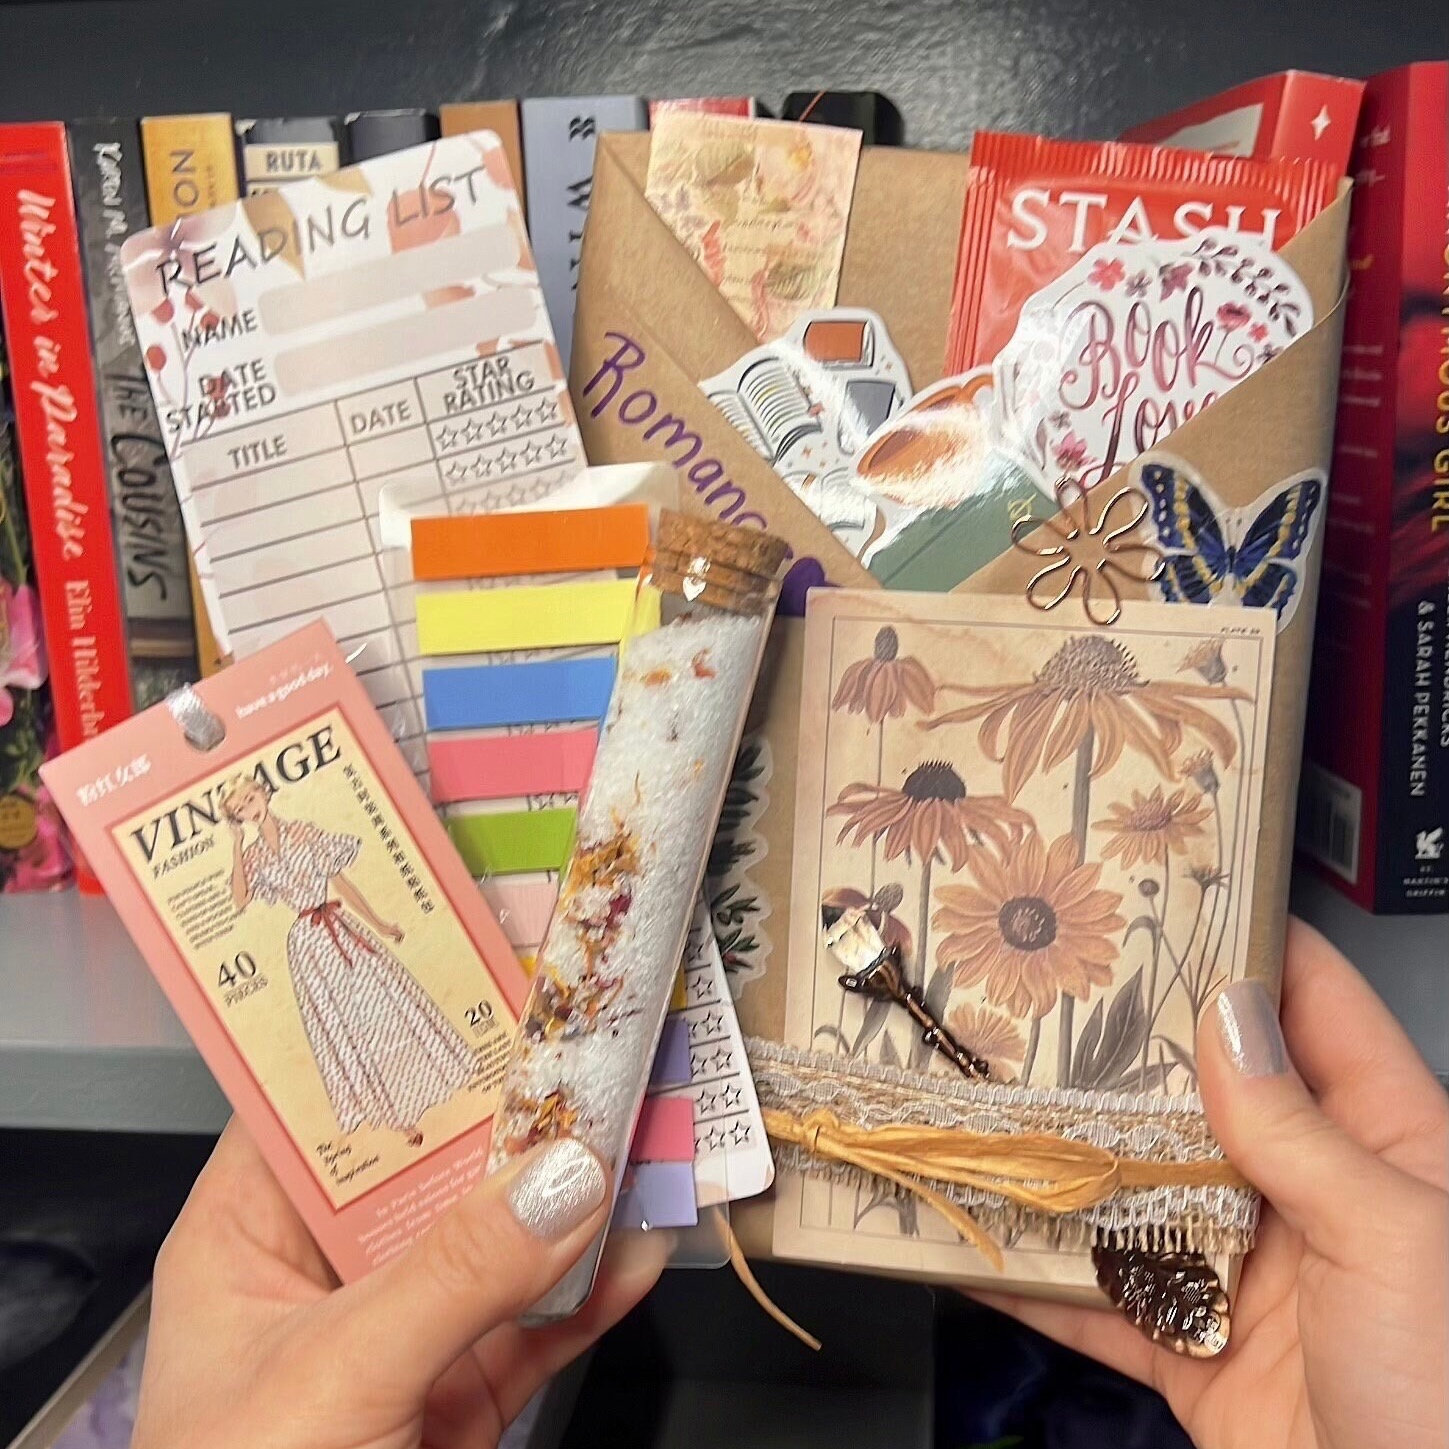 Book Lovers Birthday Gift Set — On Book Street